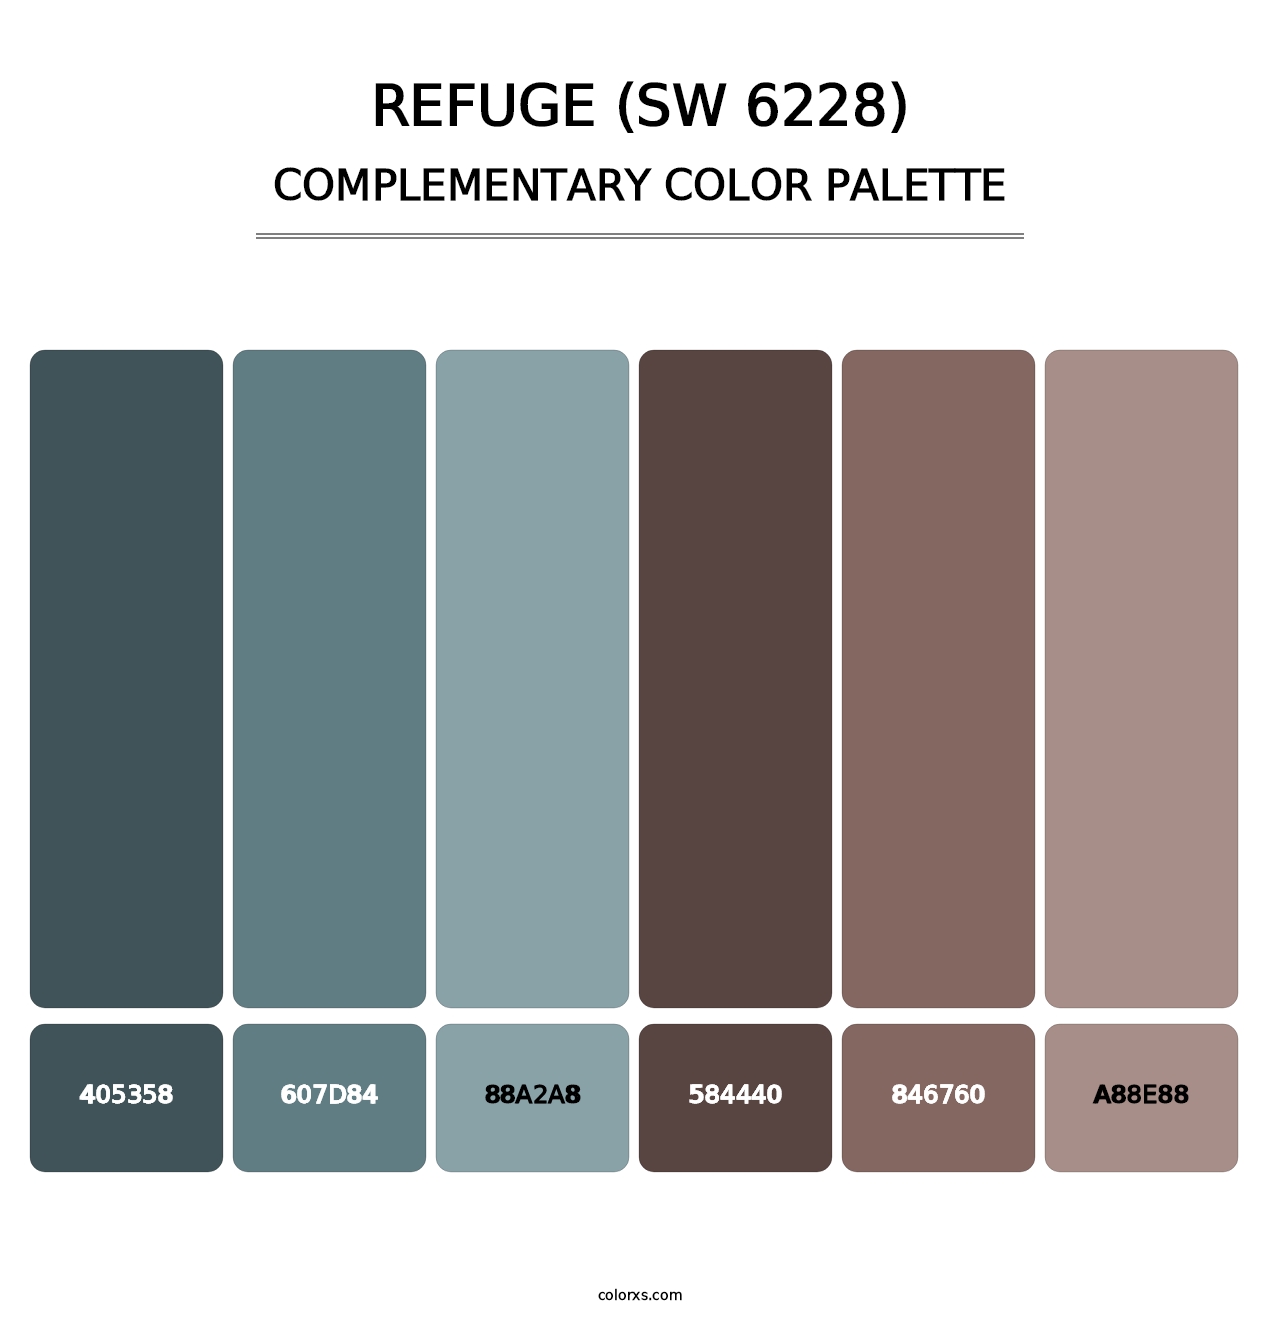 Refuge (SW 6228) - Complementary Color Palette